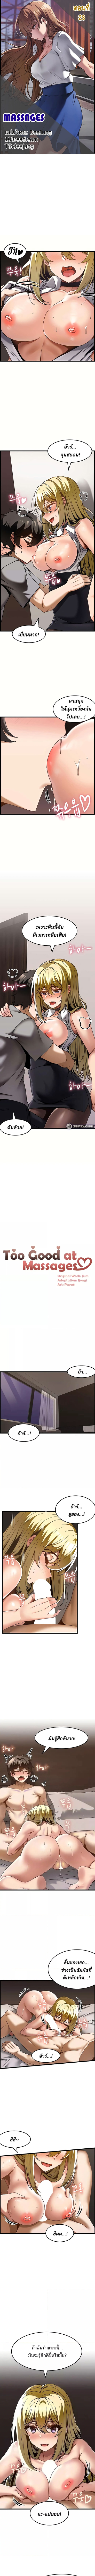 Too Good At Massages 28 (1)